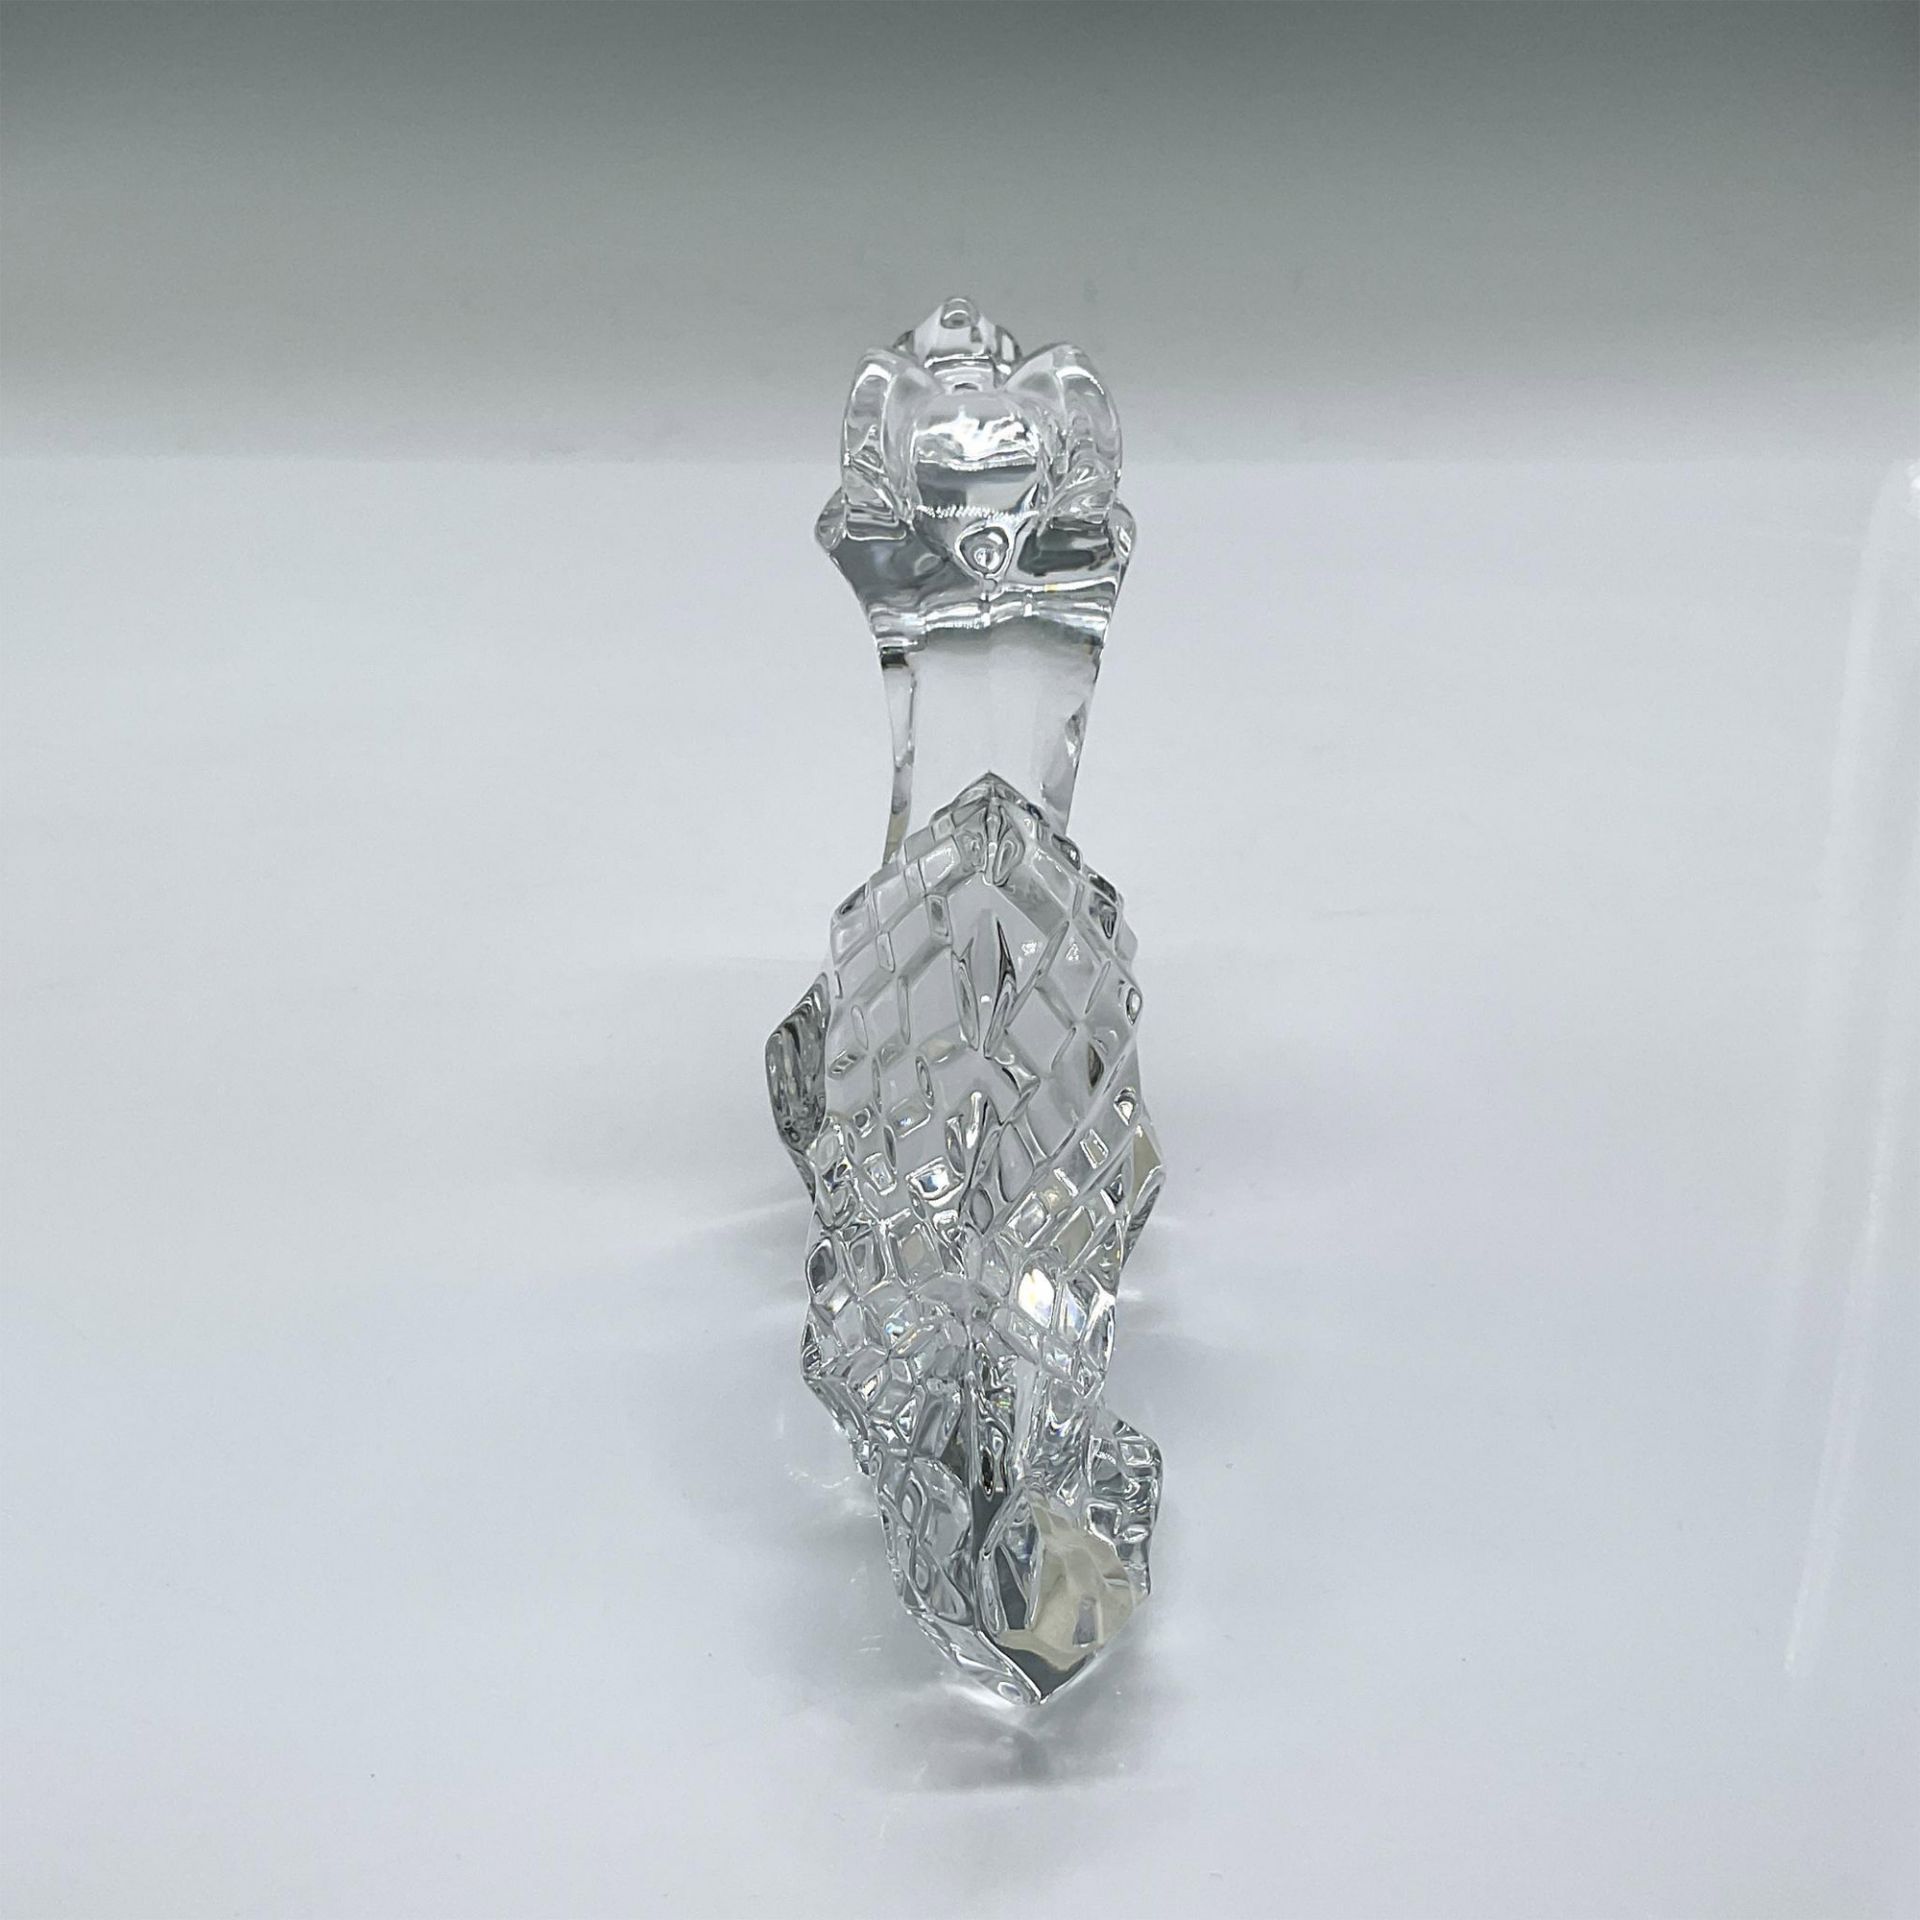 Baccarat Crystal Figurine, Dragon - Image 3 of 4